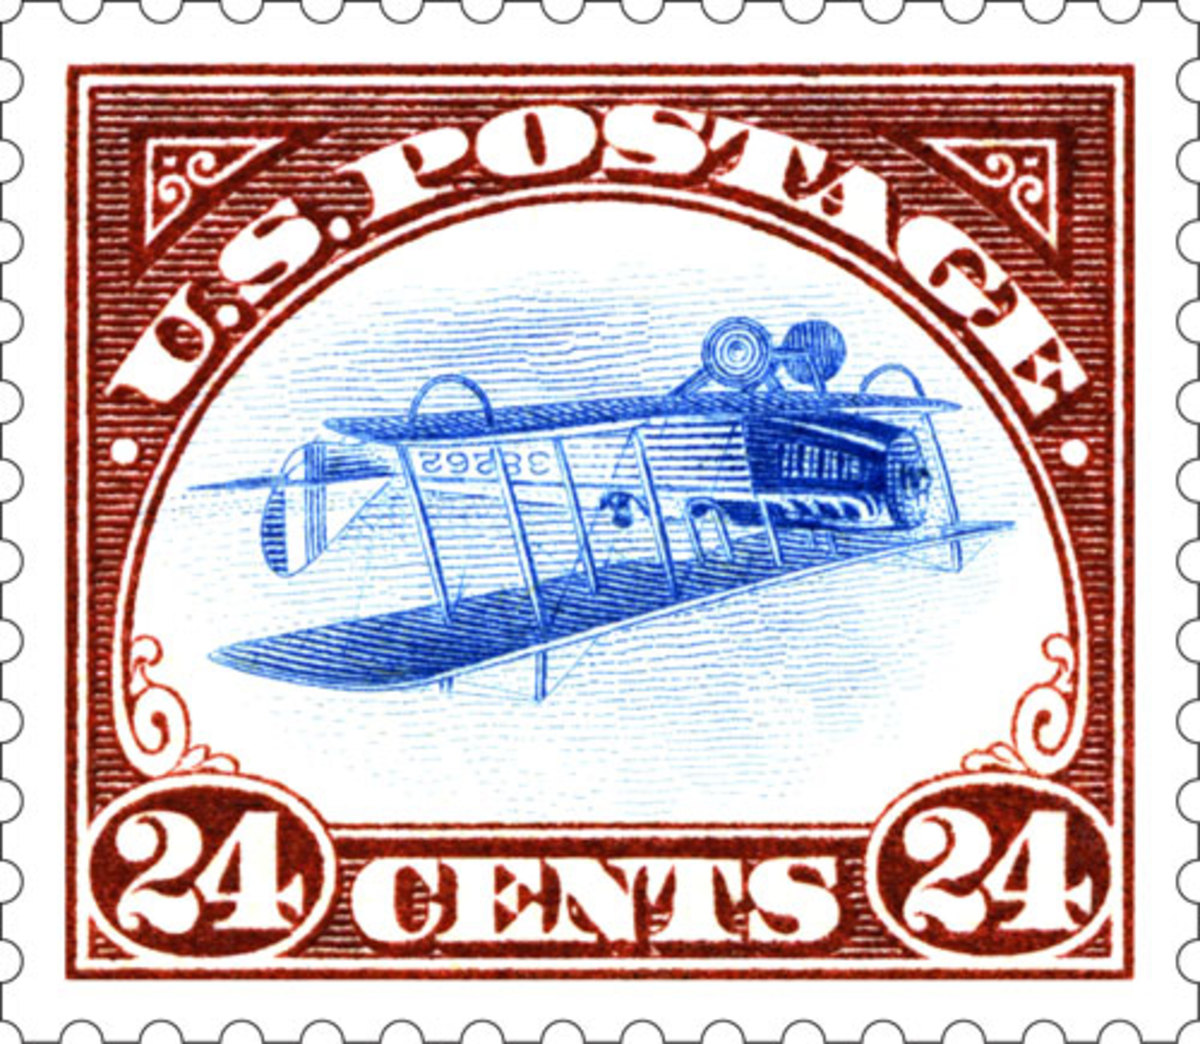 Inverted Jenny stamp